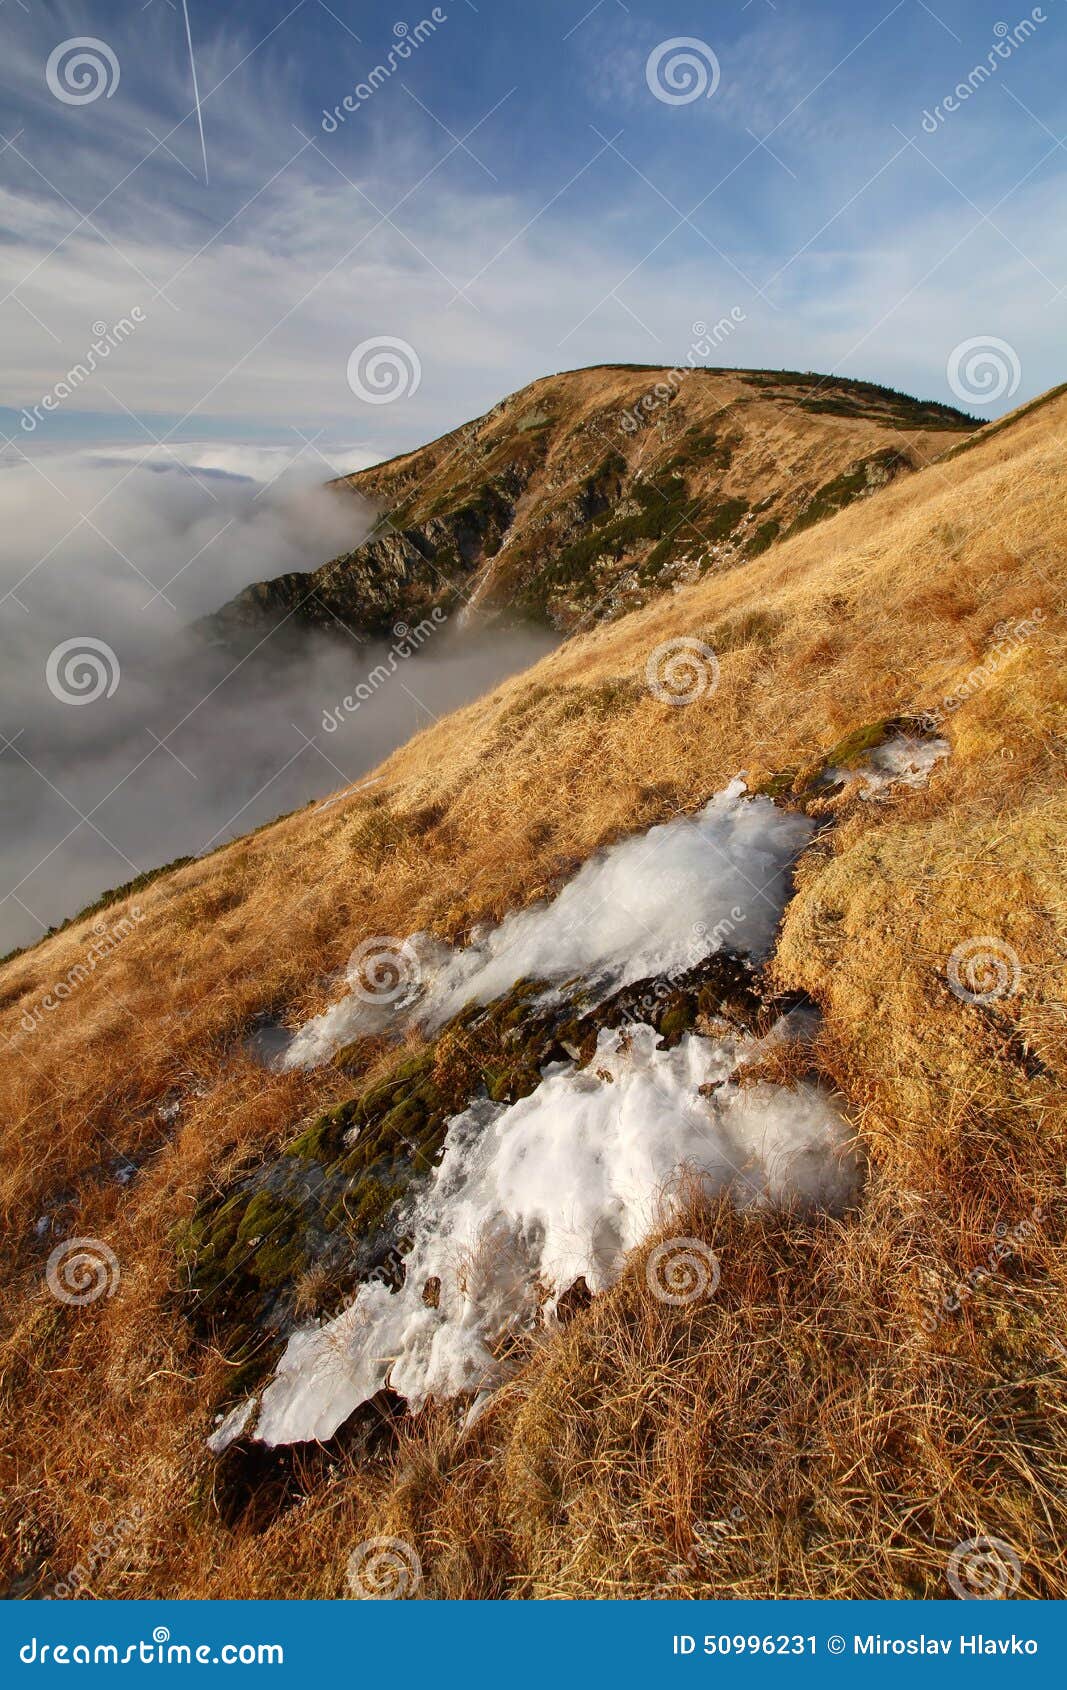 kotel hill in krkonose mountains